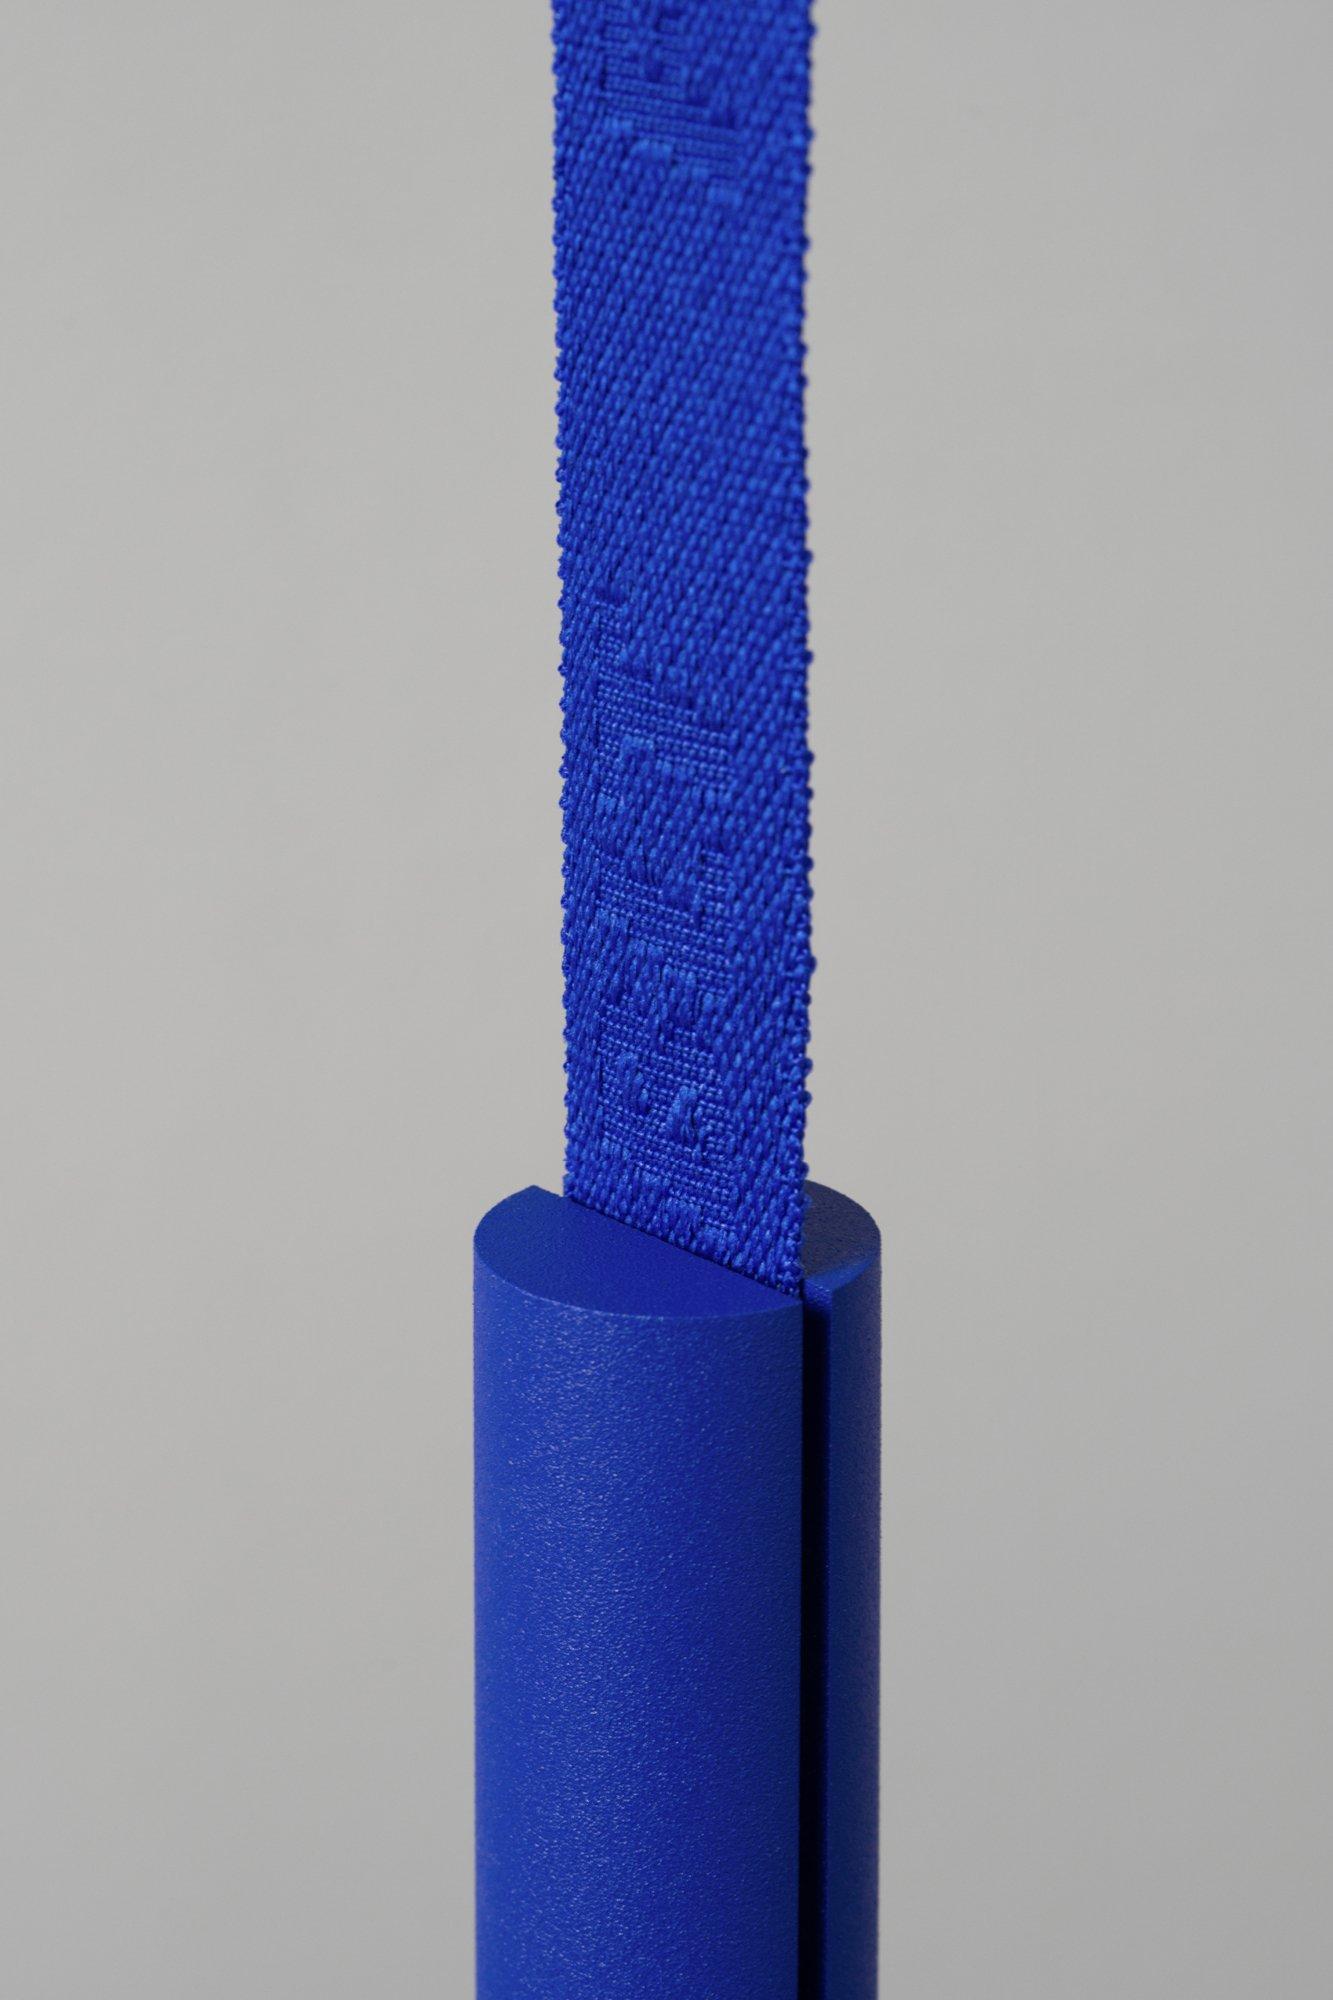 BLT_5 Ultra Blue Pendant Lamp by +kouple For Sale 5